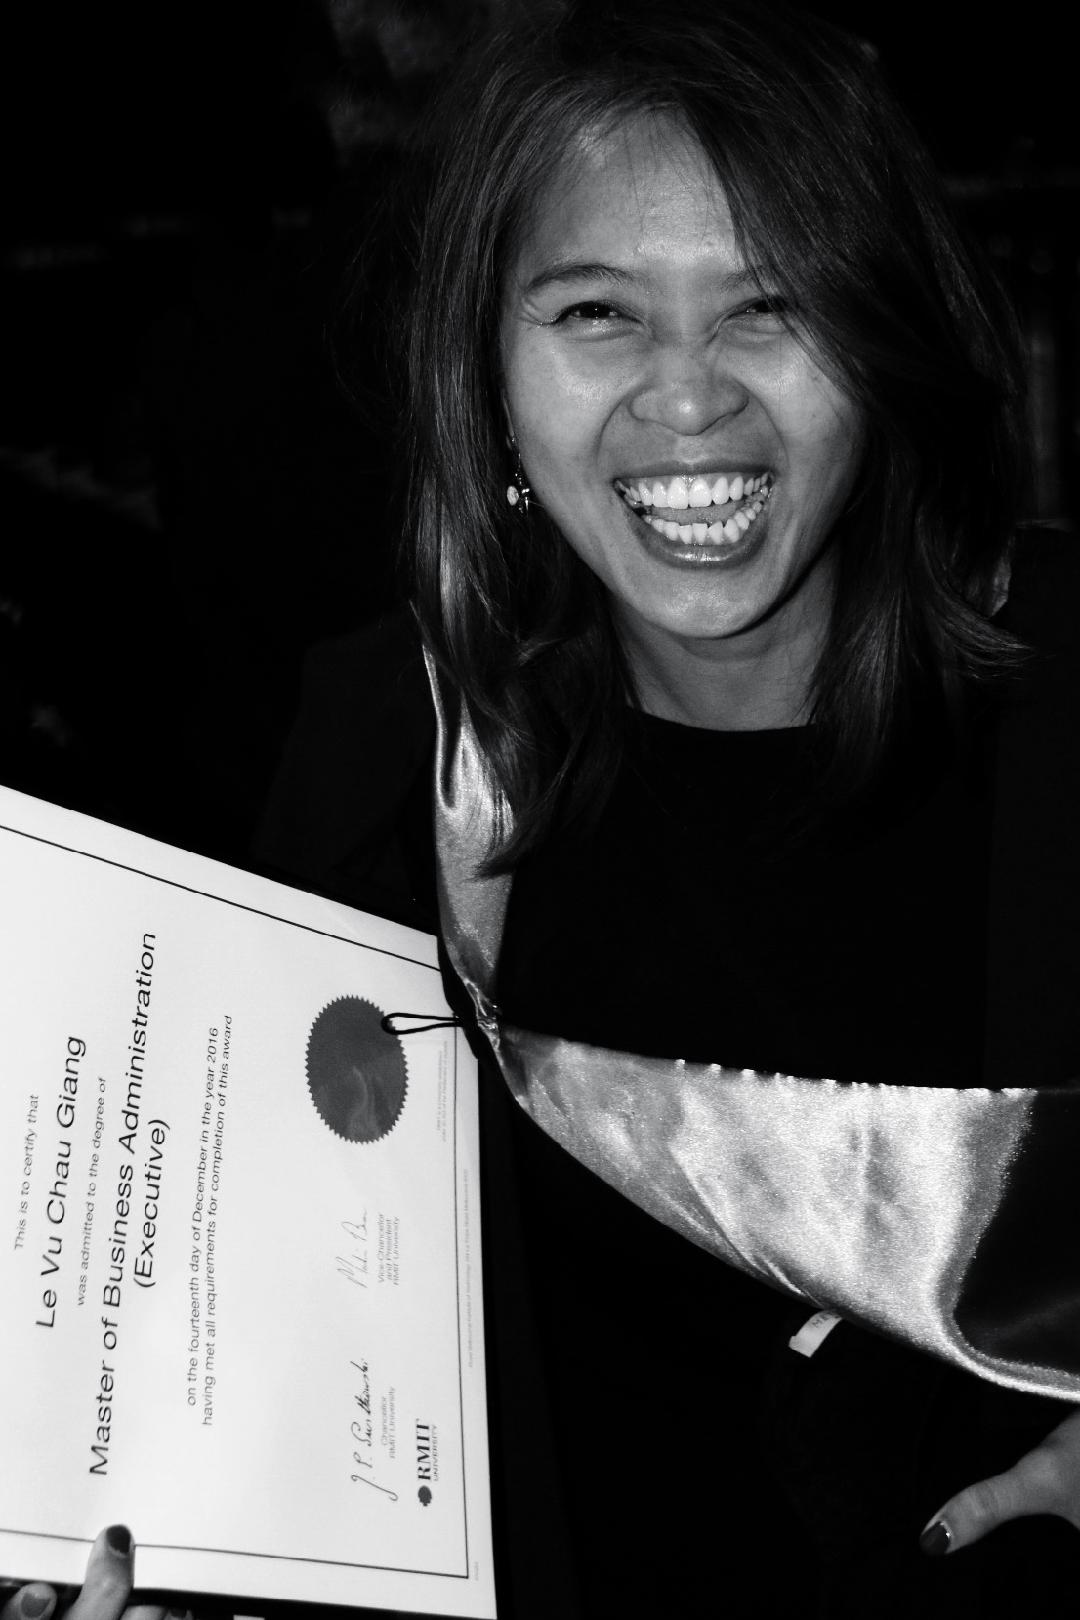 Gigi Le at her RMIT graduation ceremony in Melbourne in 2016.